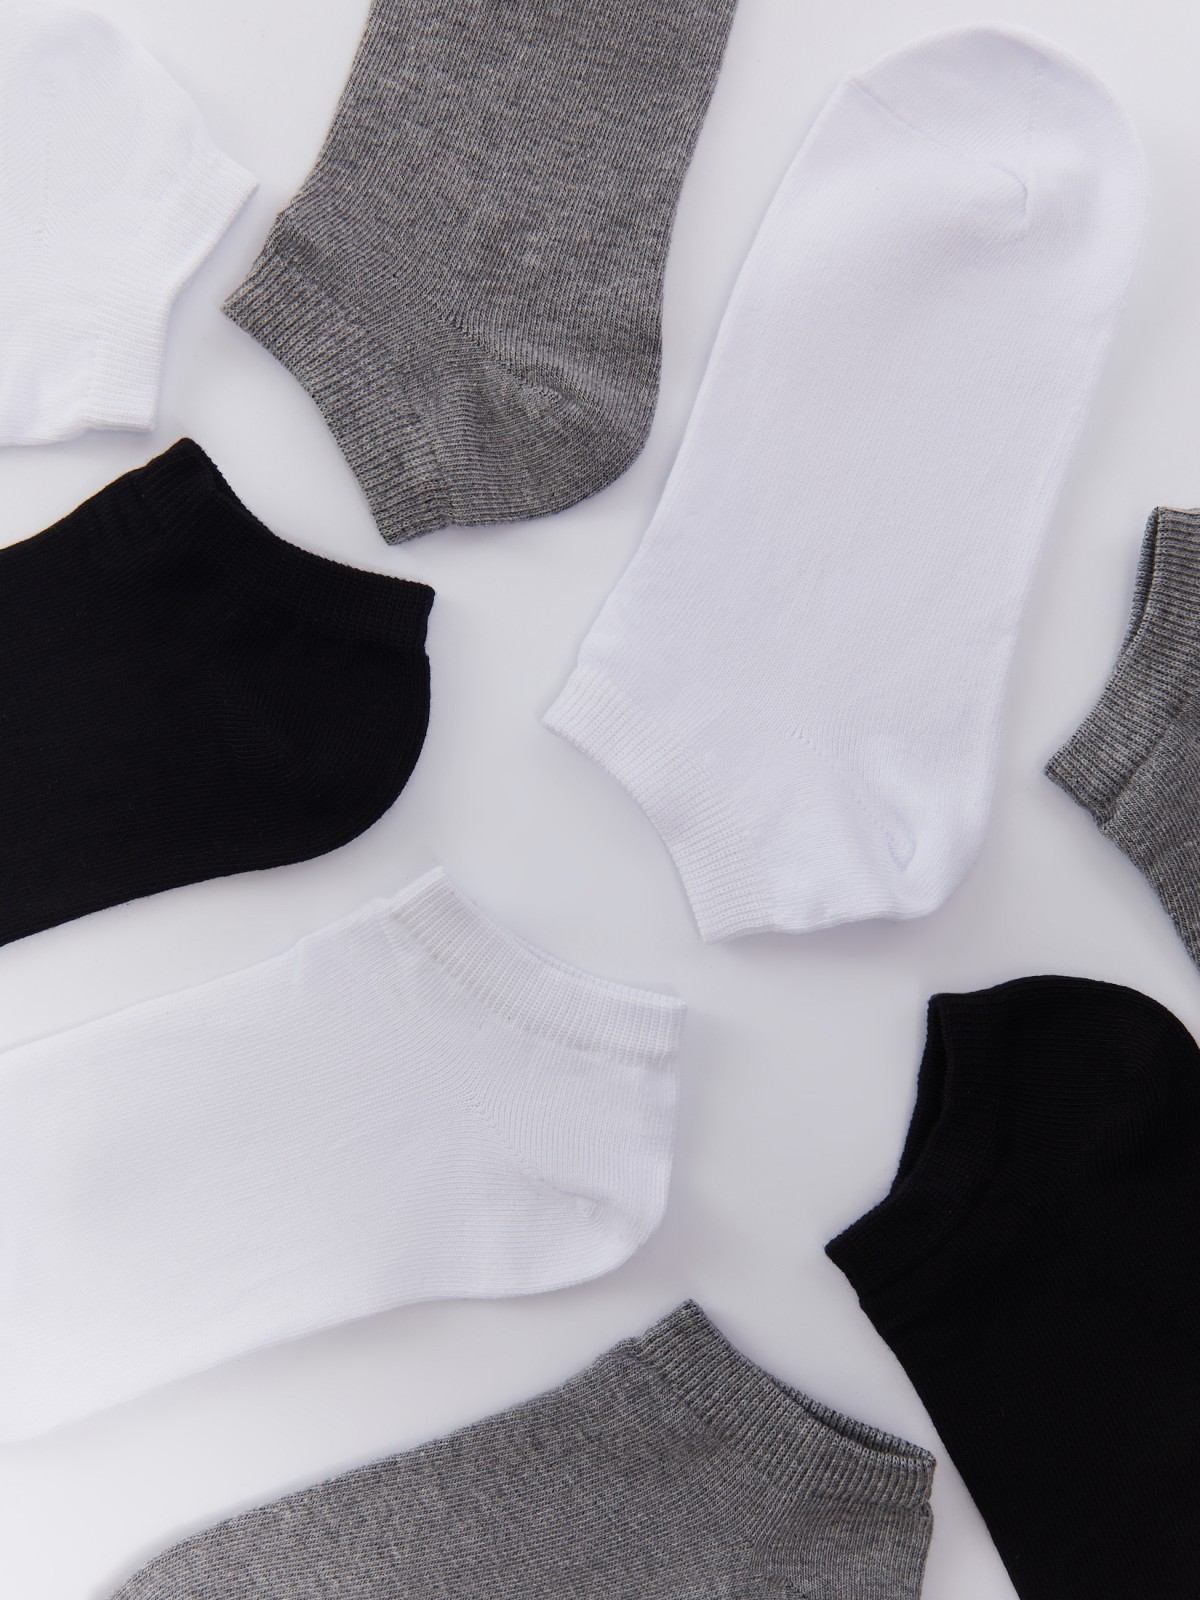 Набор коротких носков (5 пар в комплекте) zolla 02411998J055, цвет серый, размер 23-25 - фото 2